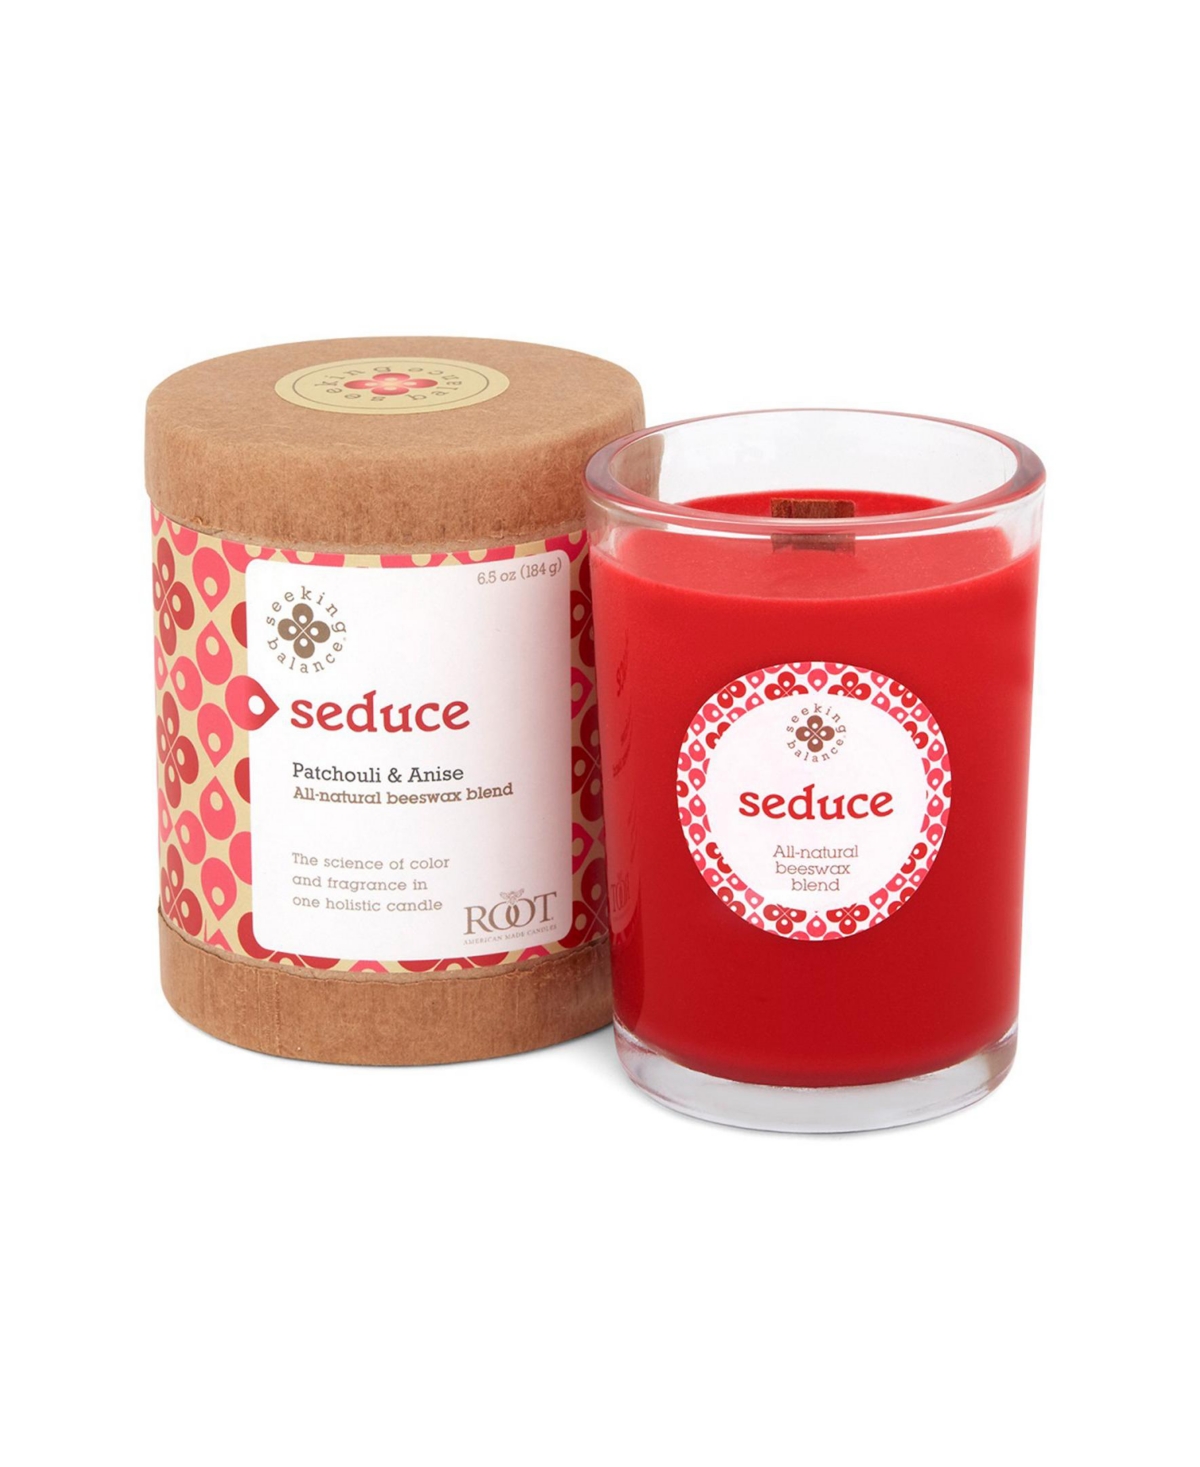 Seeking Balance Seduce Patchouli Anise Spa Jar Candle, 6.5 oz - Red